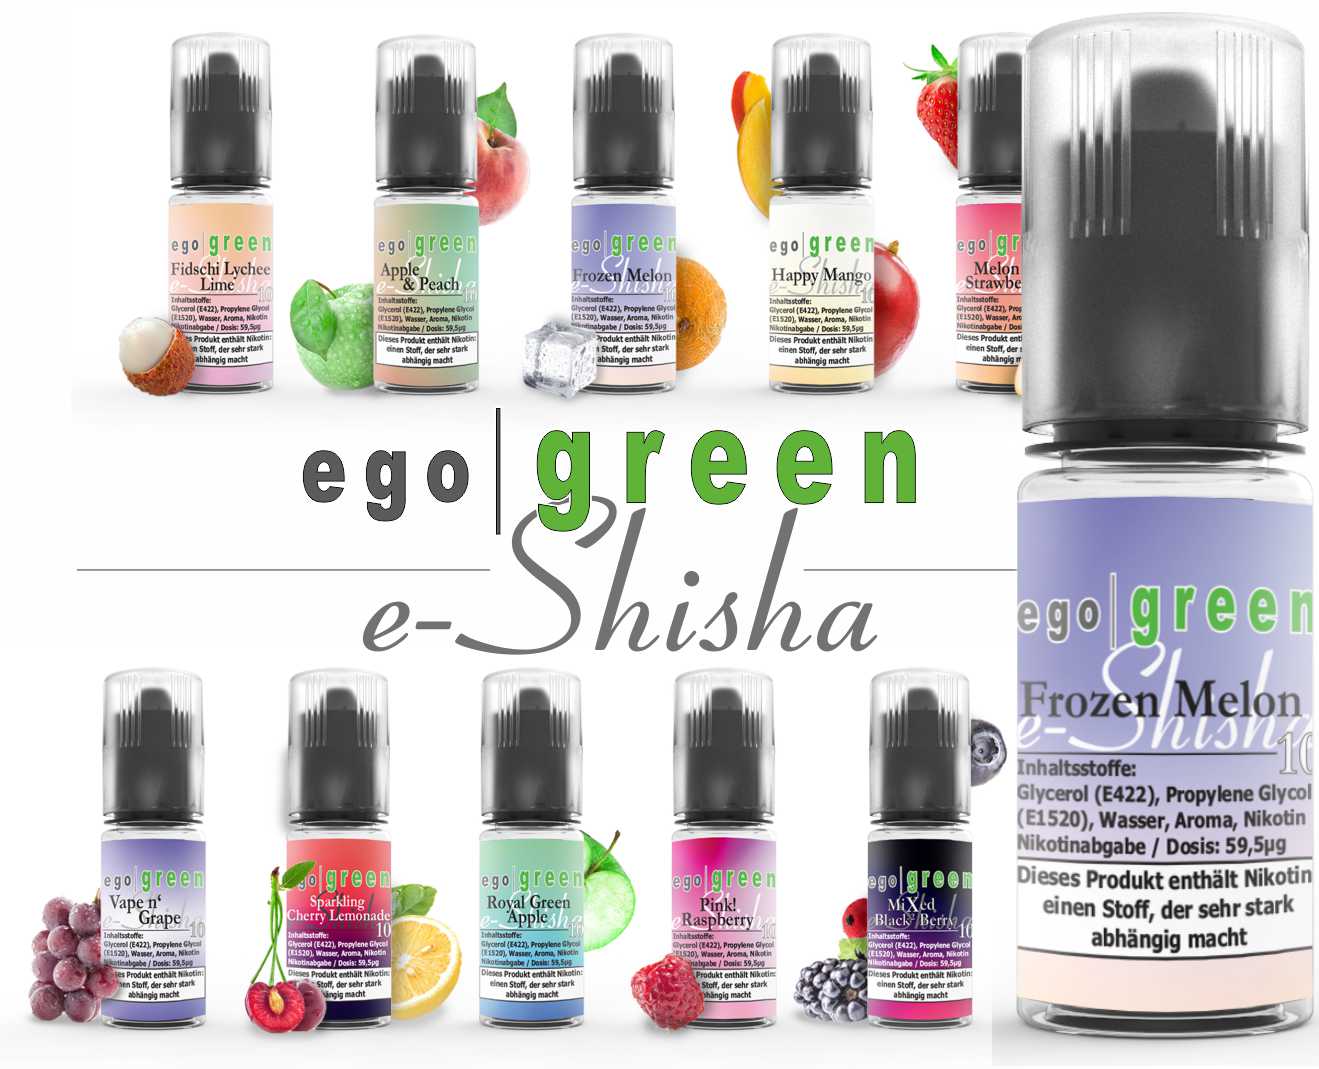 egogreen Frozen Melon e-Shisha Nikotinsalz Liquid online kaufen